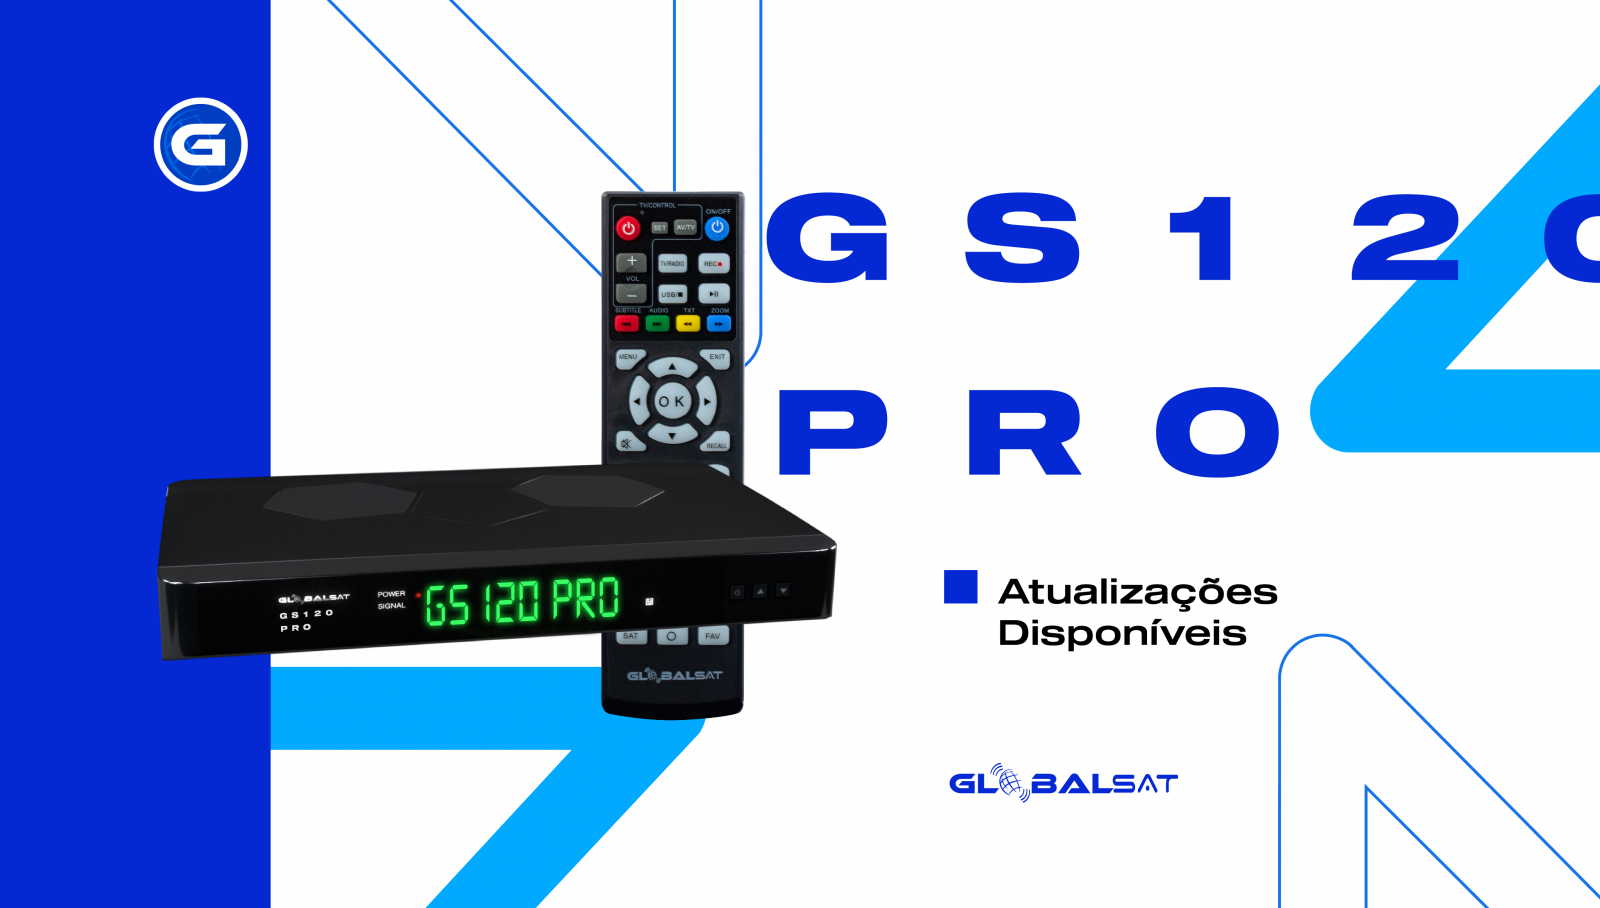   Globalsat GS120 Primeira